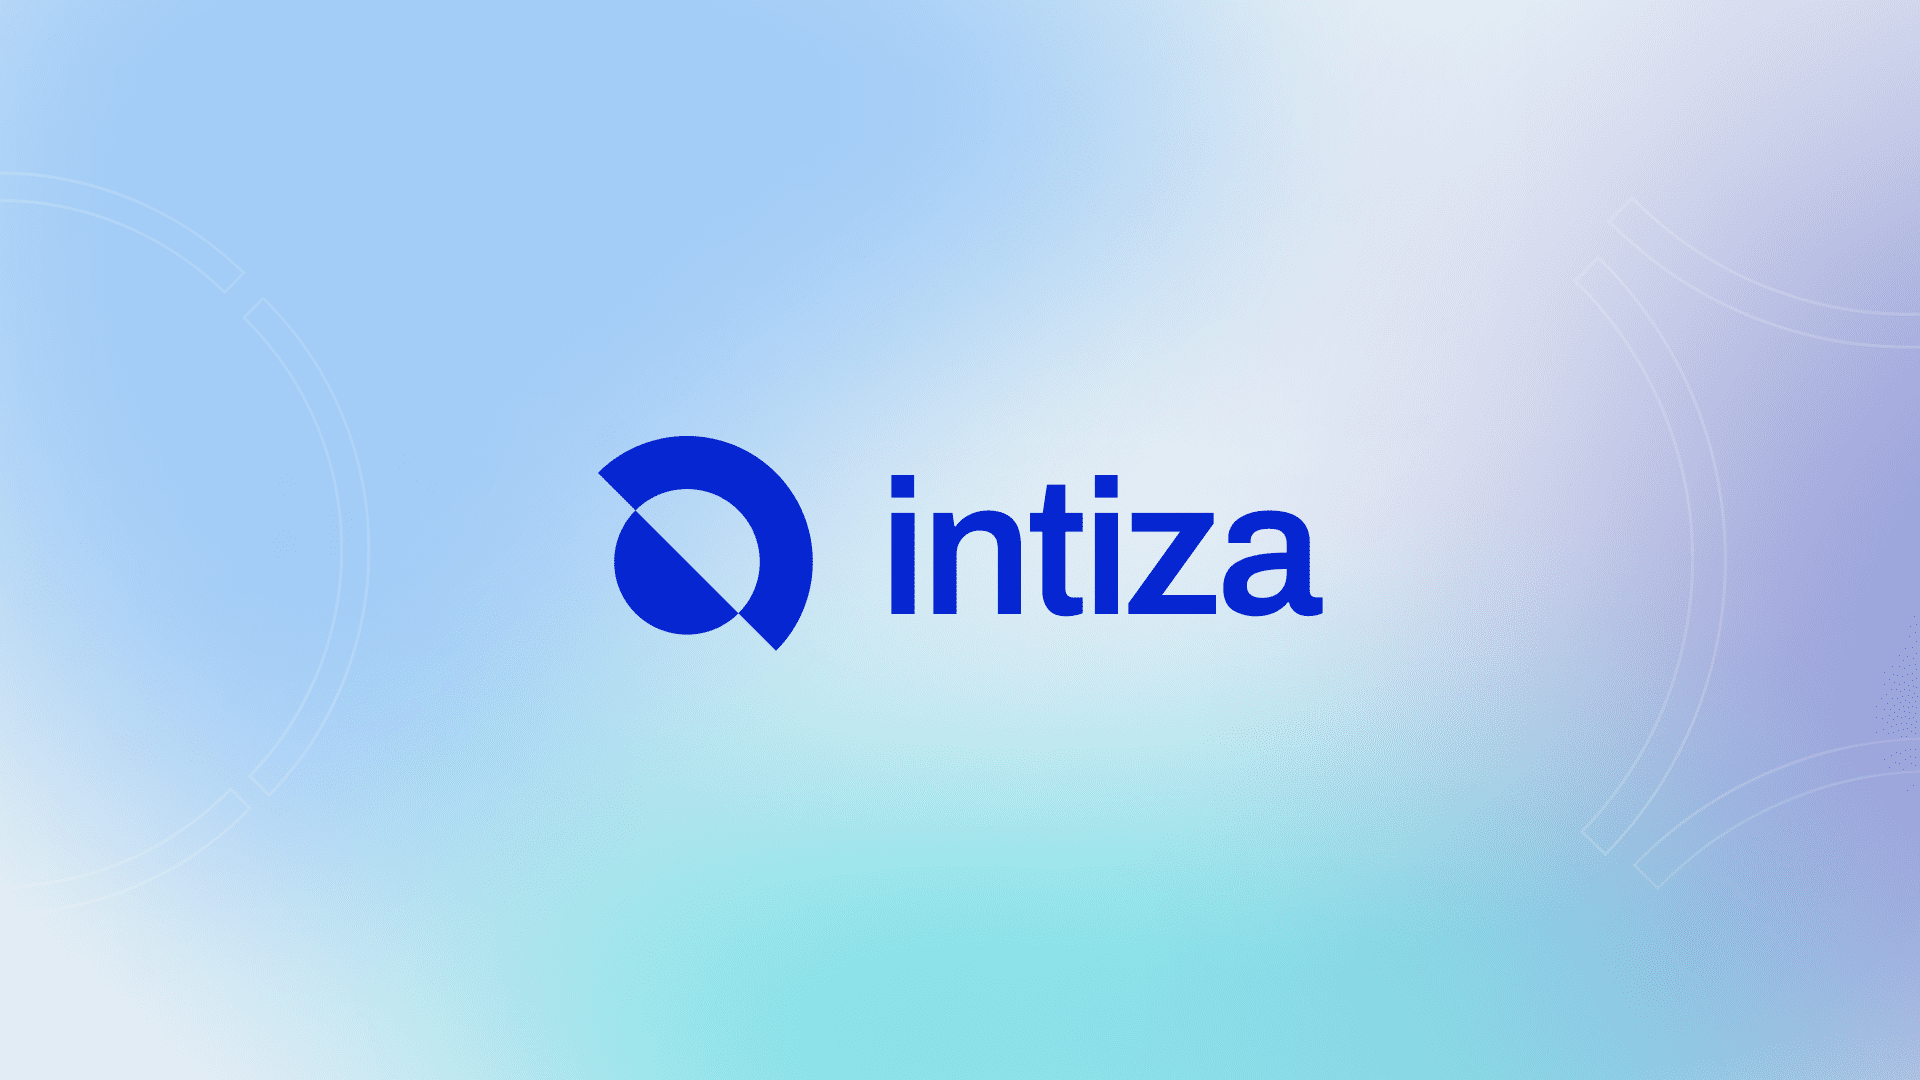 (c) Intiza.com